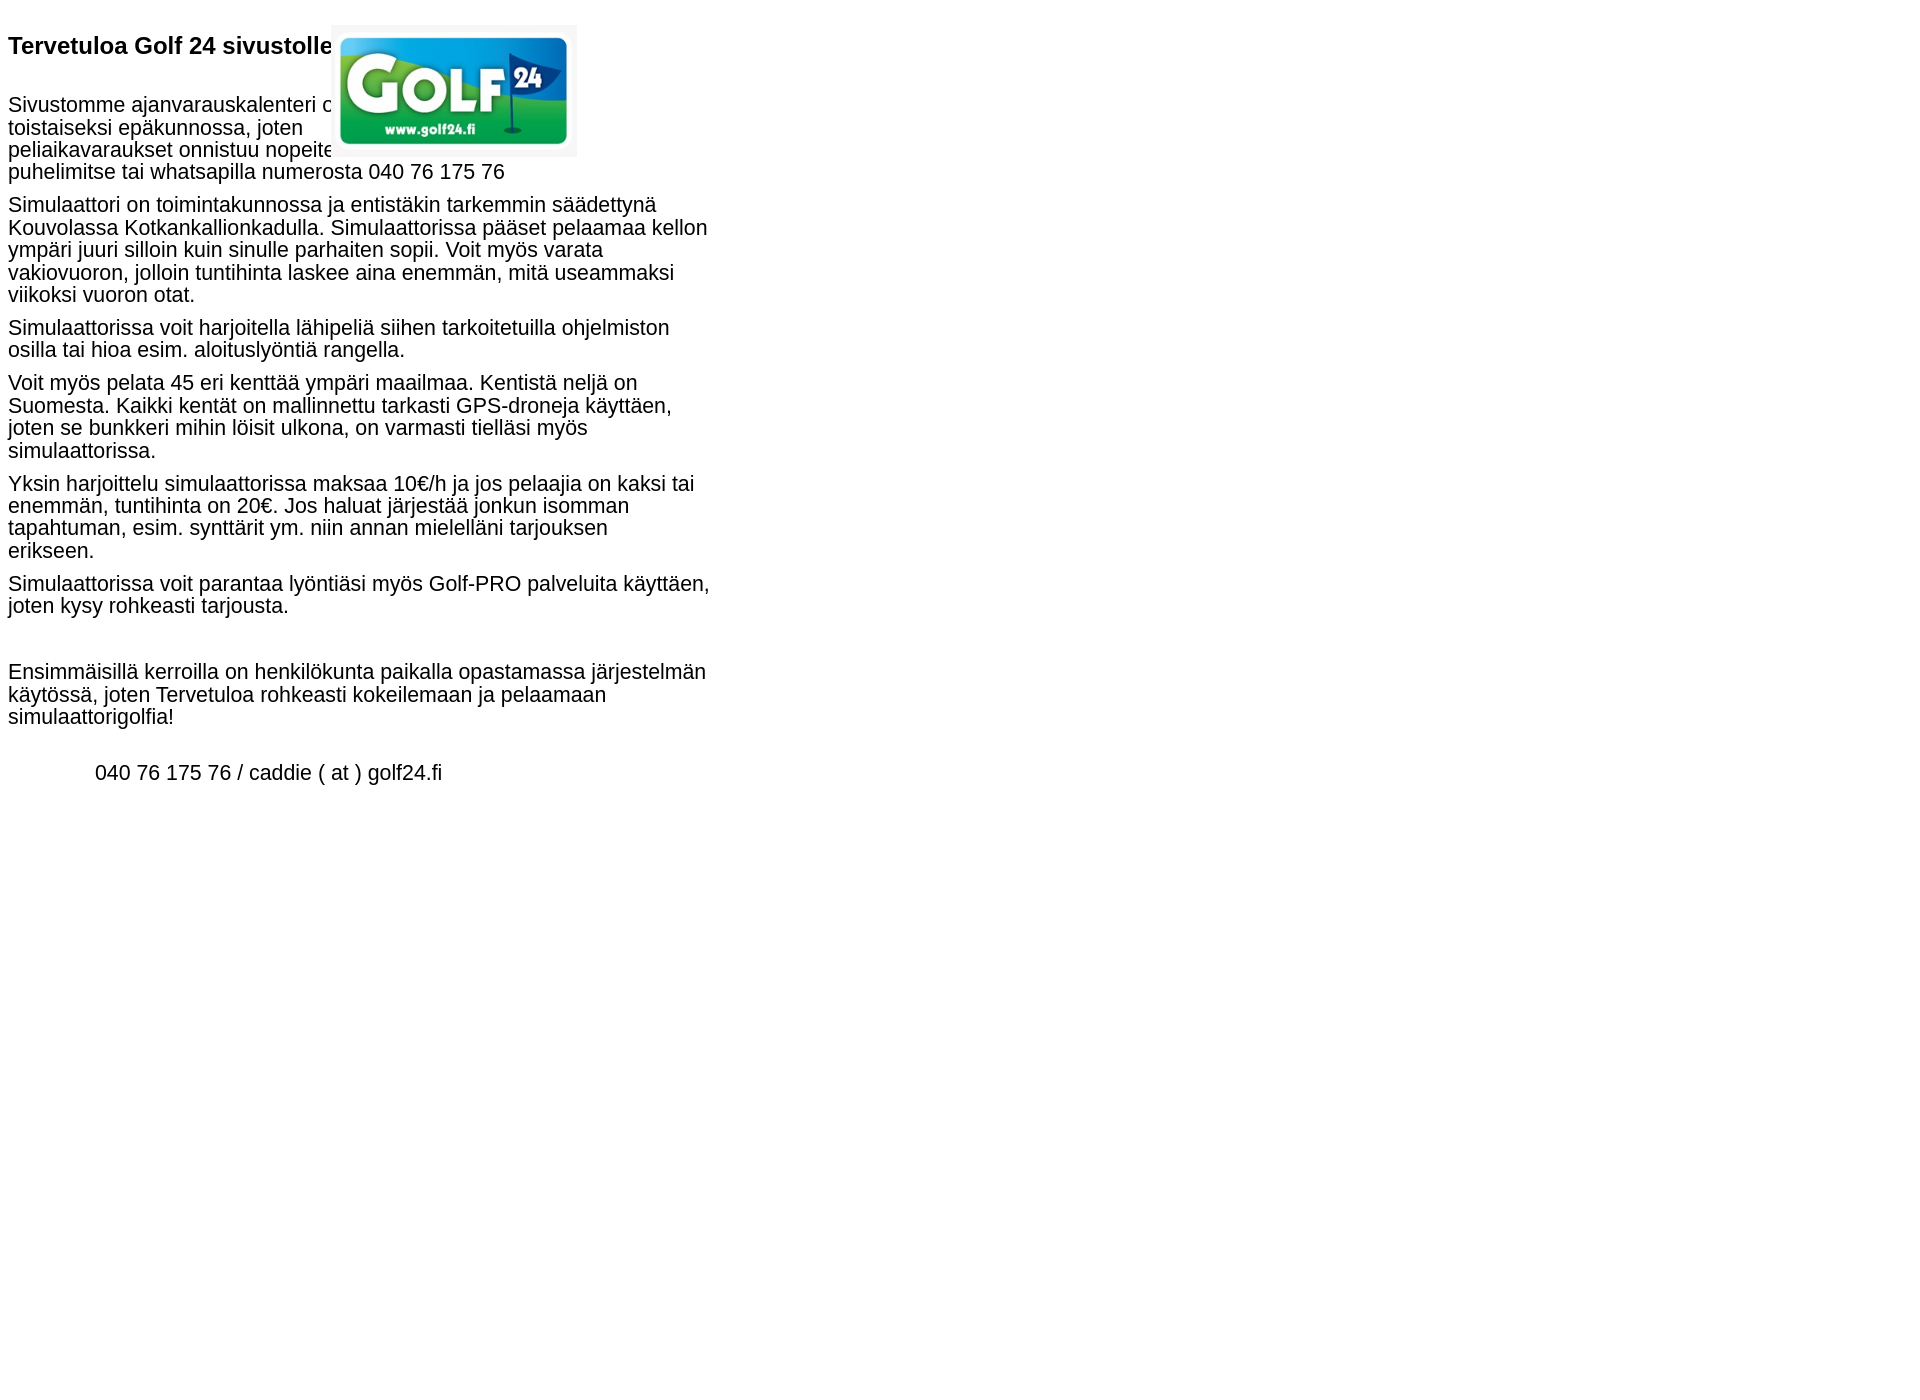 Näyttökuva golf24.fi